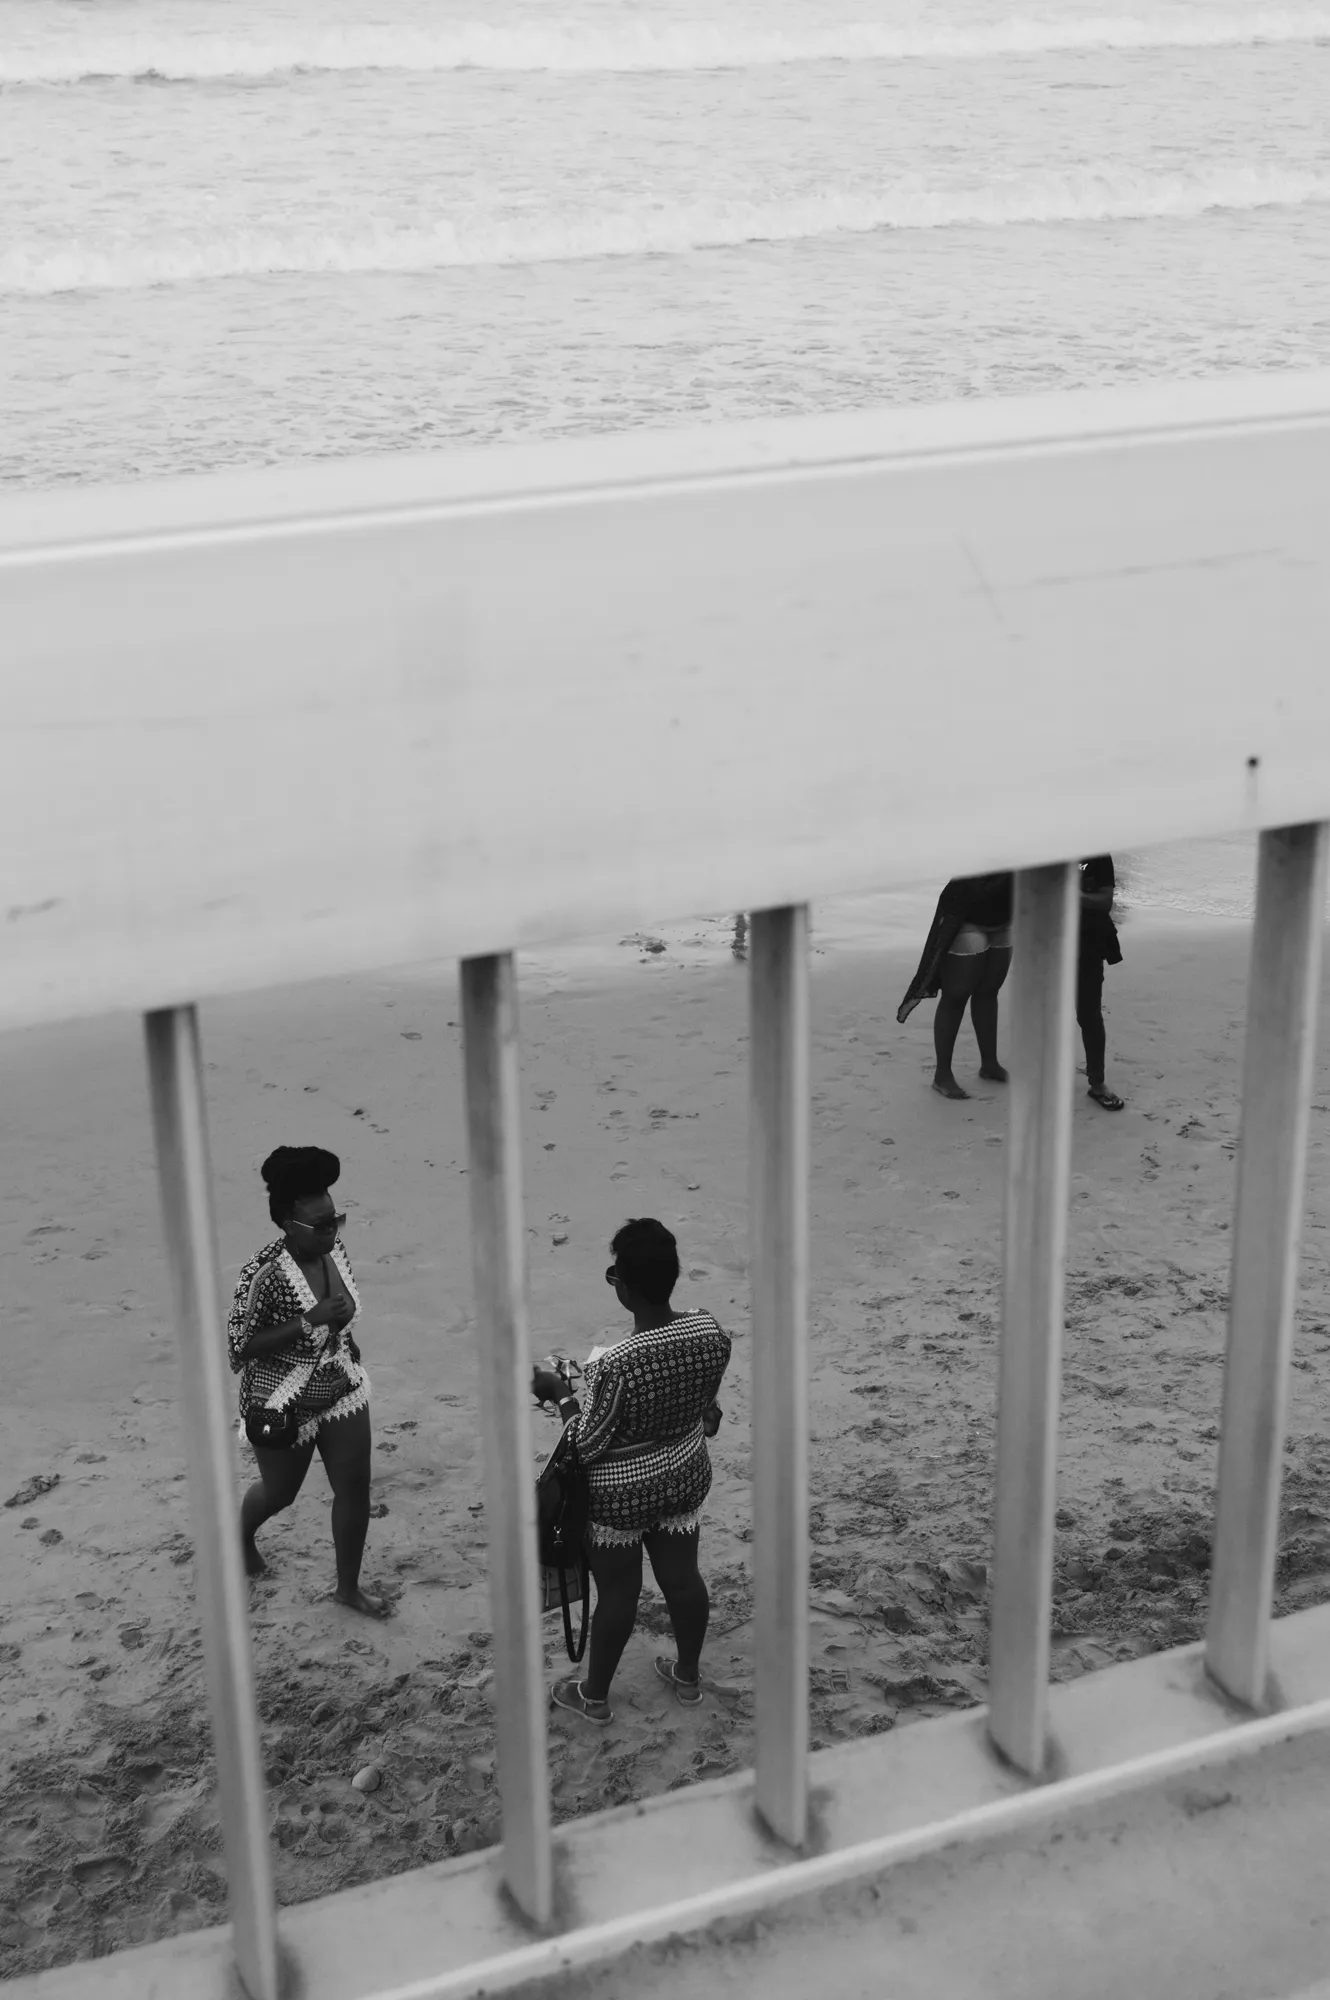 2018-22-12 - Port Elizabeth - People standing on beach